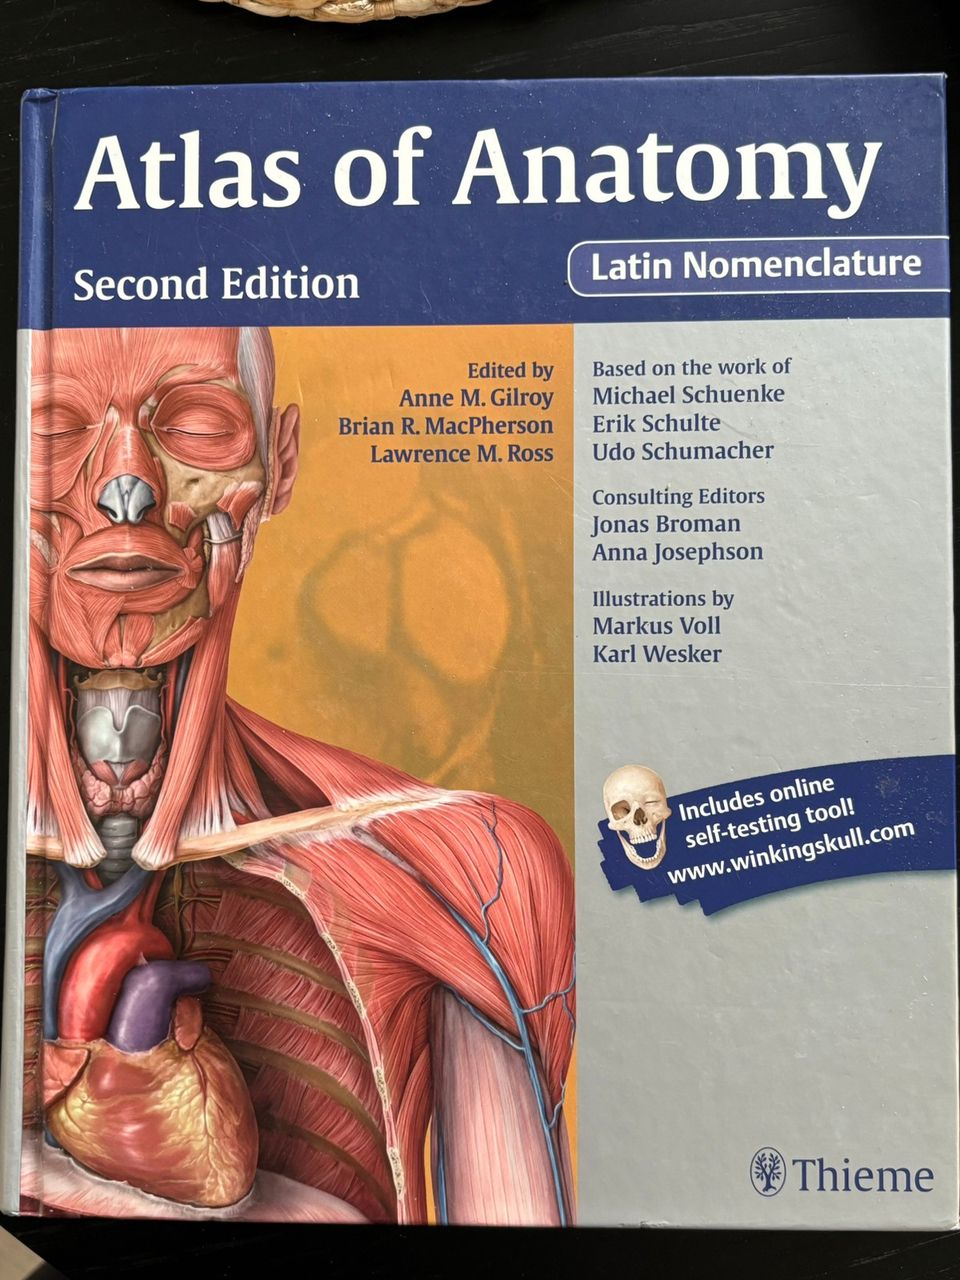 VARATTU - Thieme Atlas of Anatomy 2nd Edition